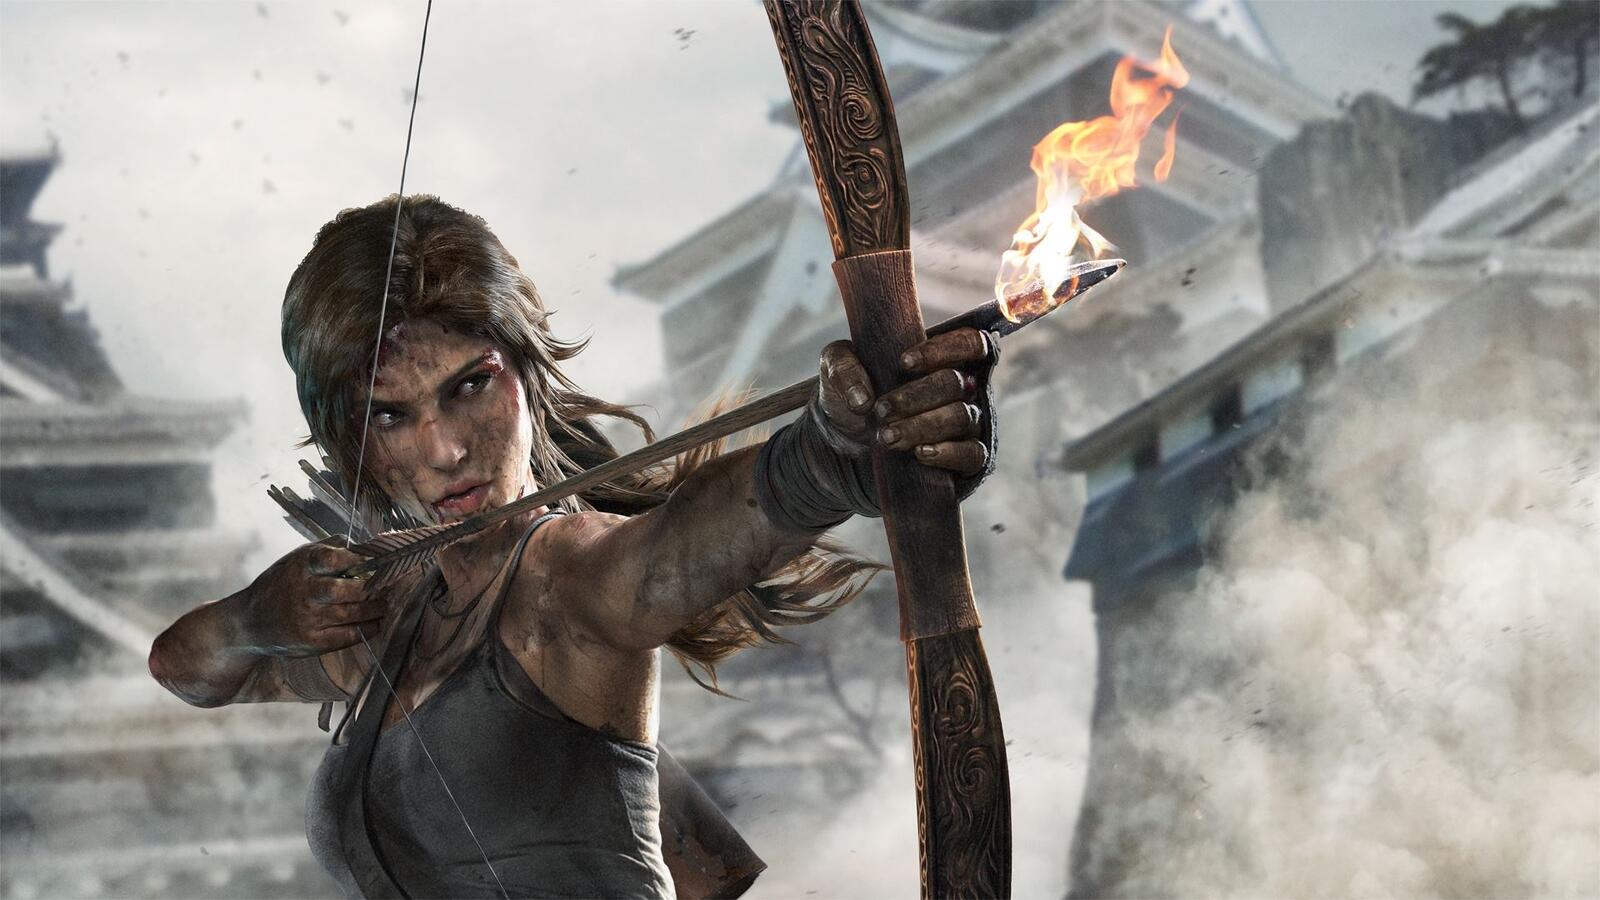 Wallpapers Lara Croft tomb raider flaming arrow on the desktop